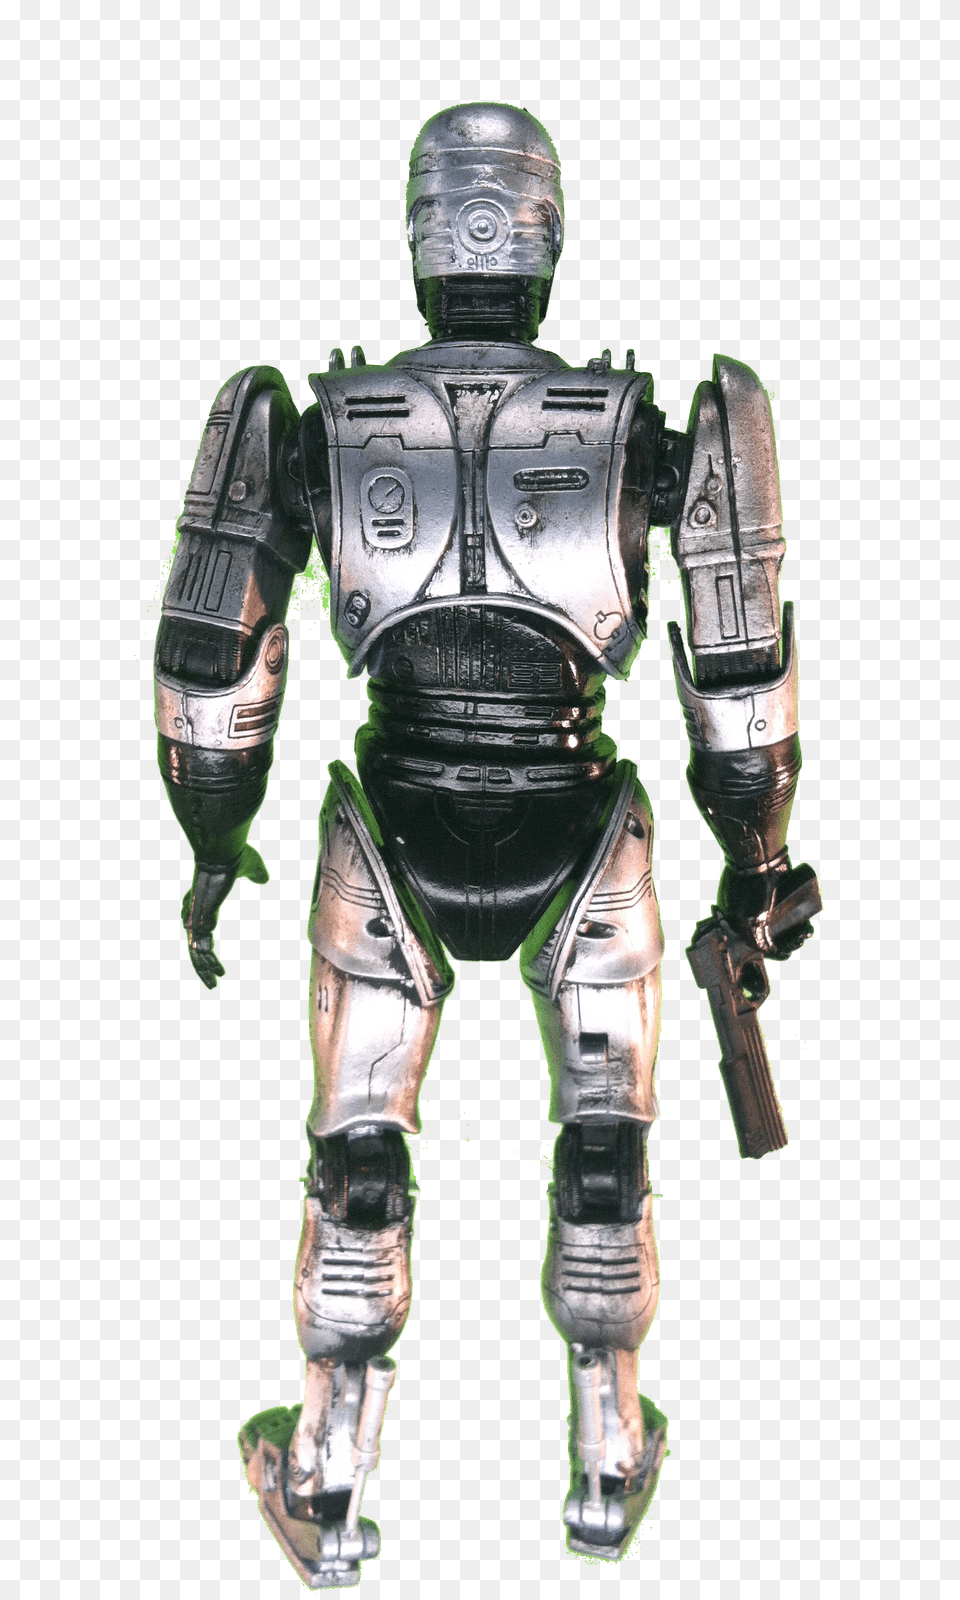 Robocop, Toy, Armor, Robot, Mortar Shell Png Image